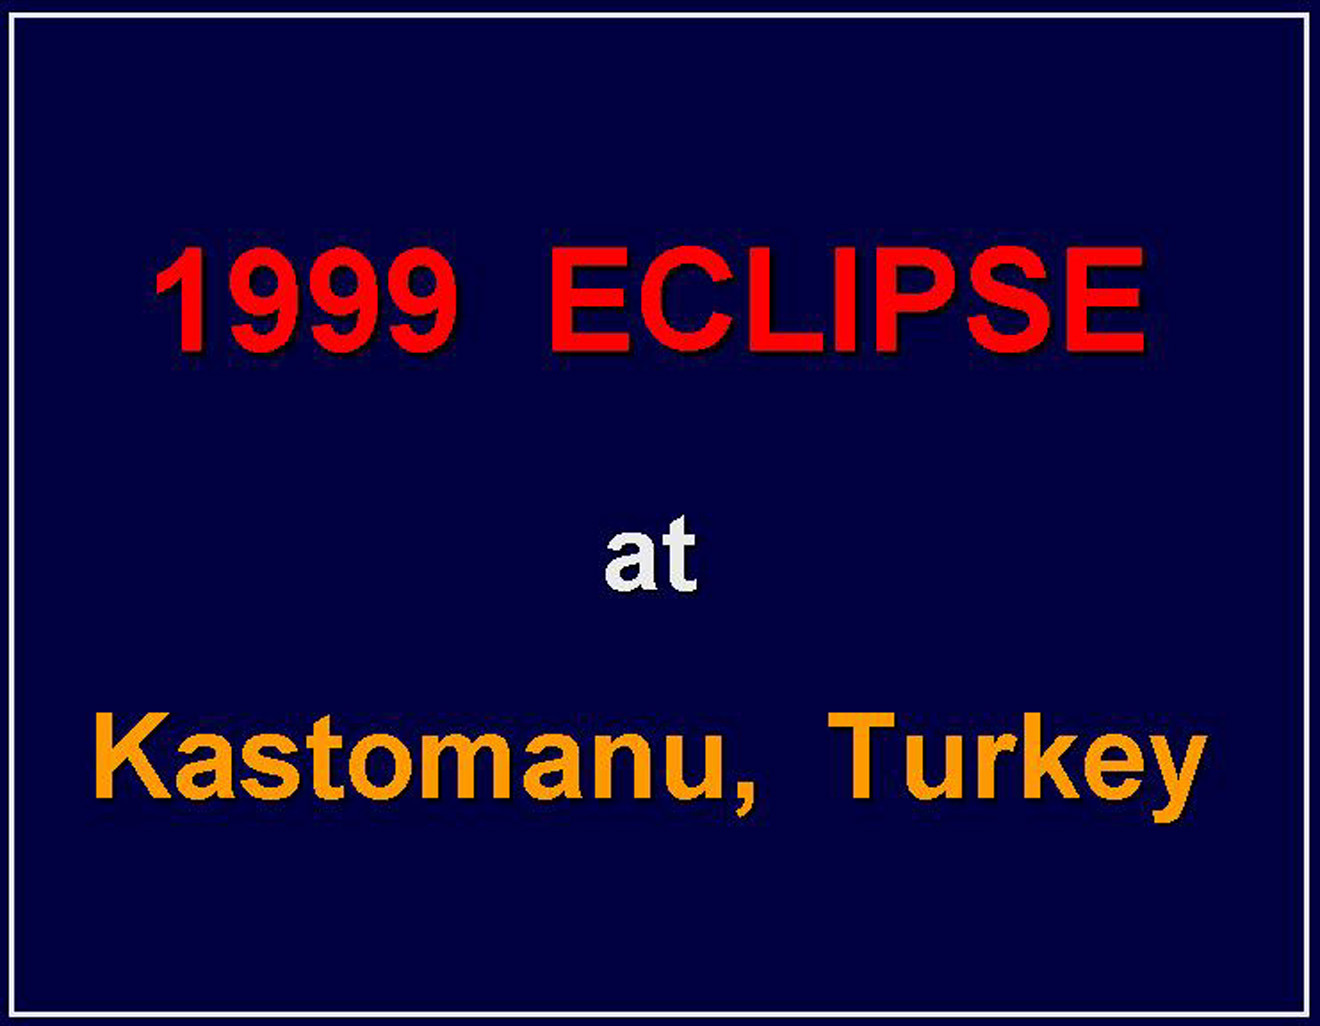 Eclipse 1999 - A01 - Slide13 - Title